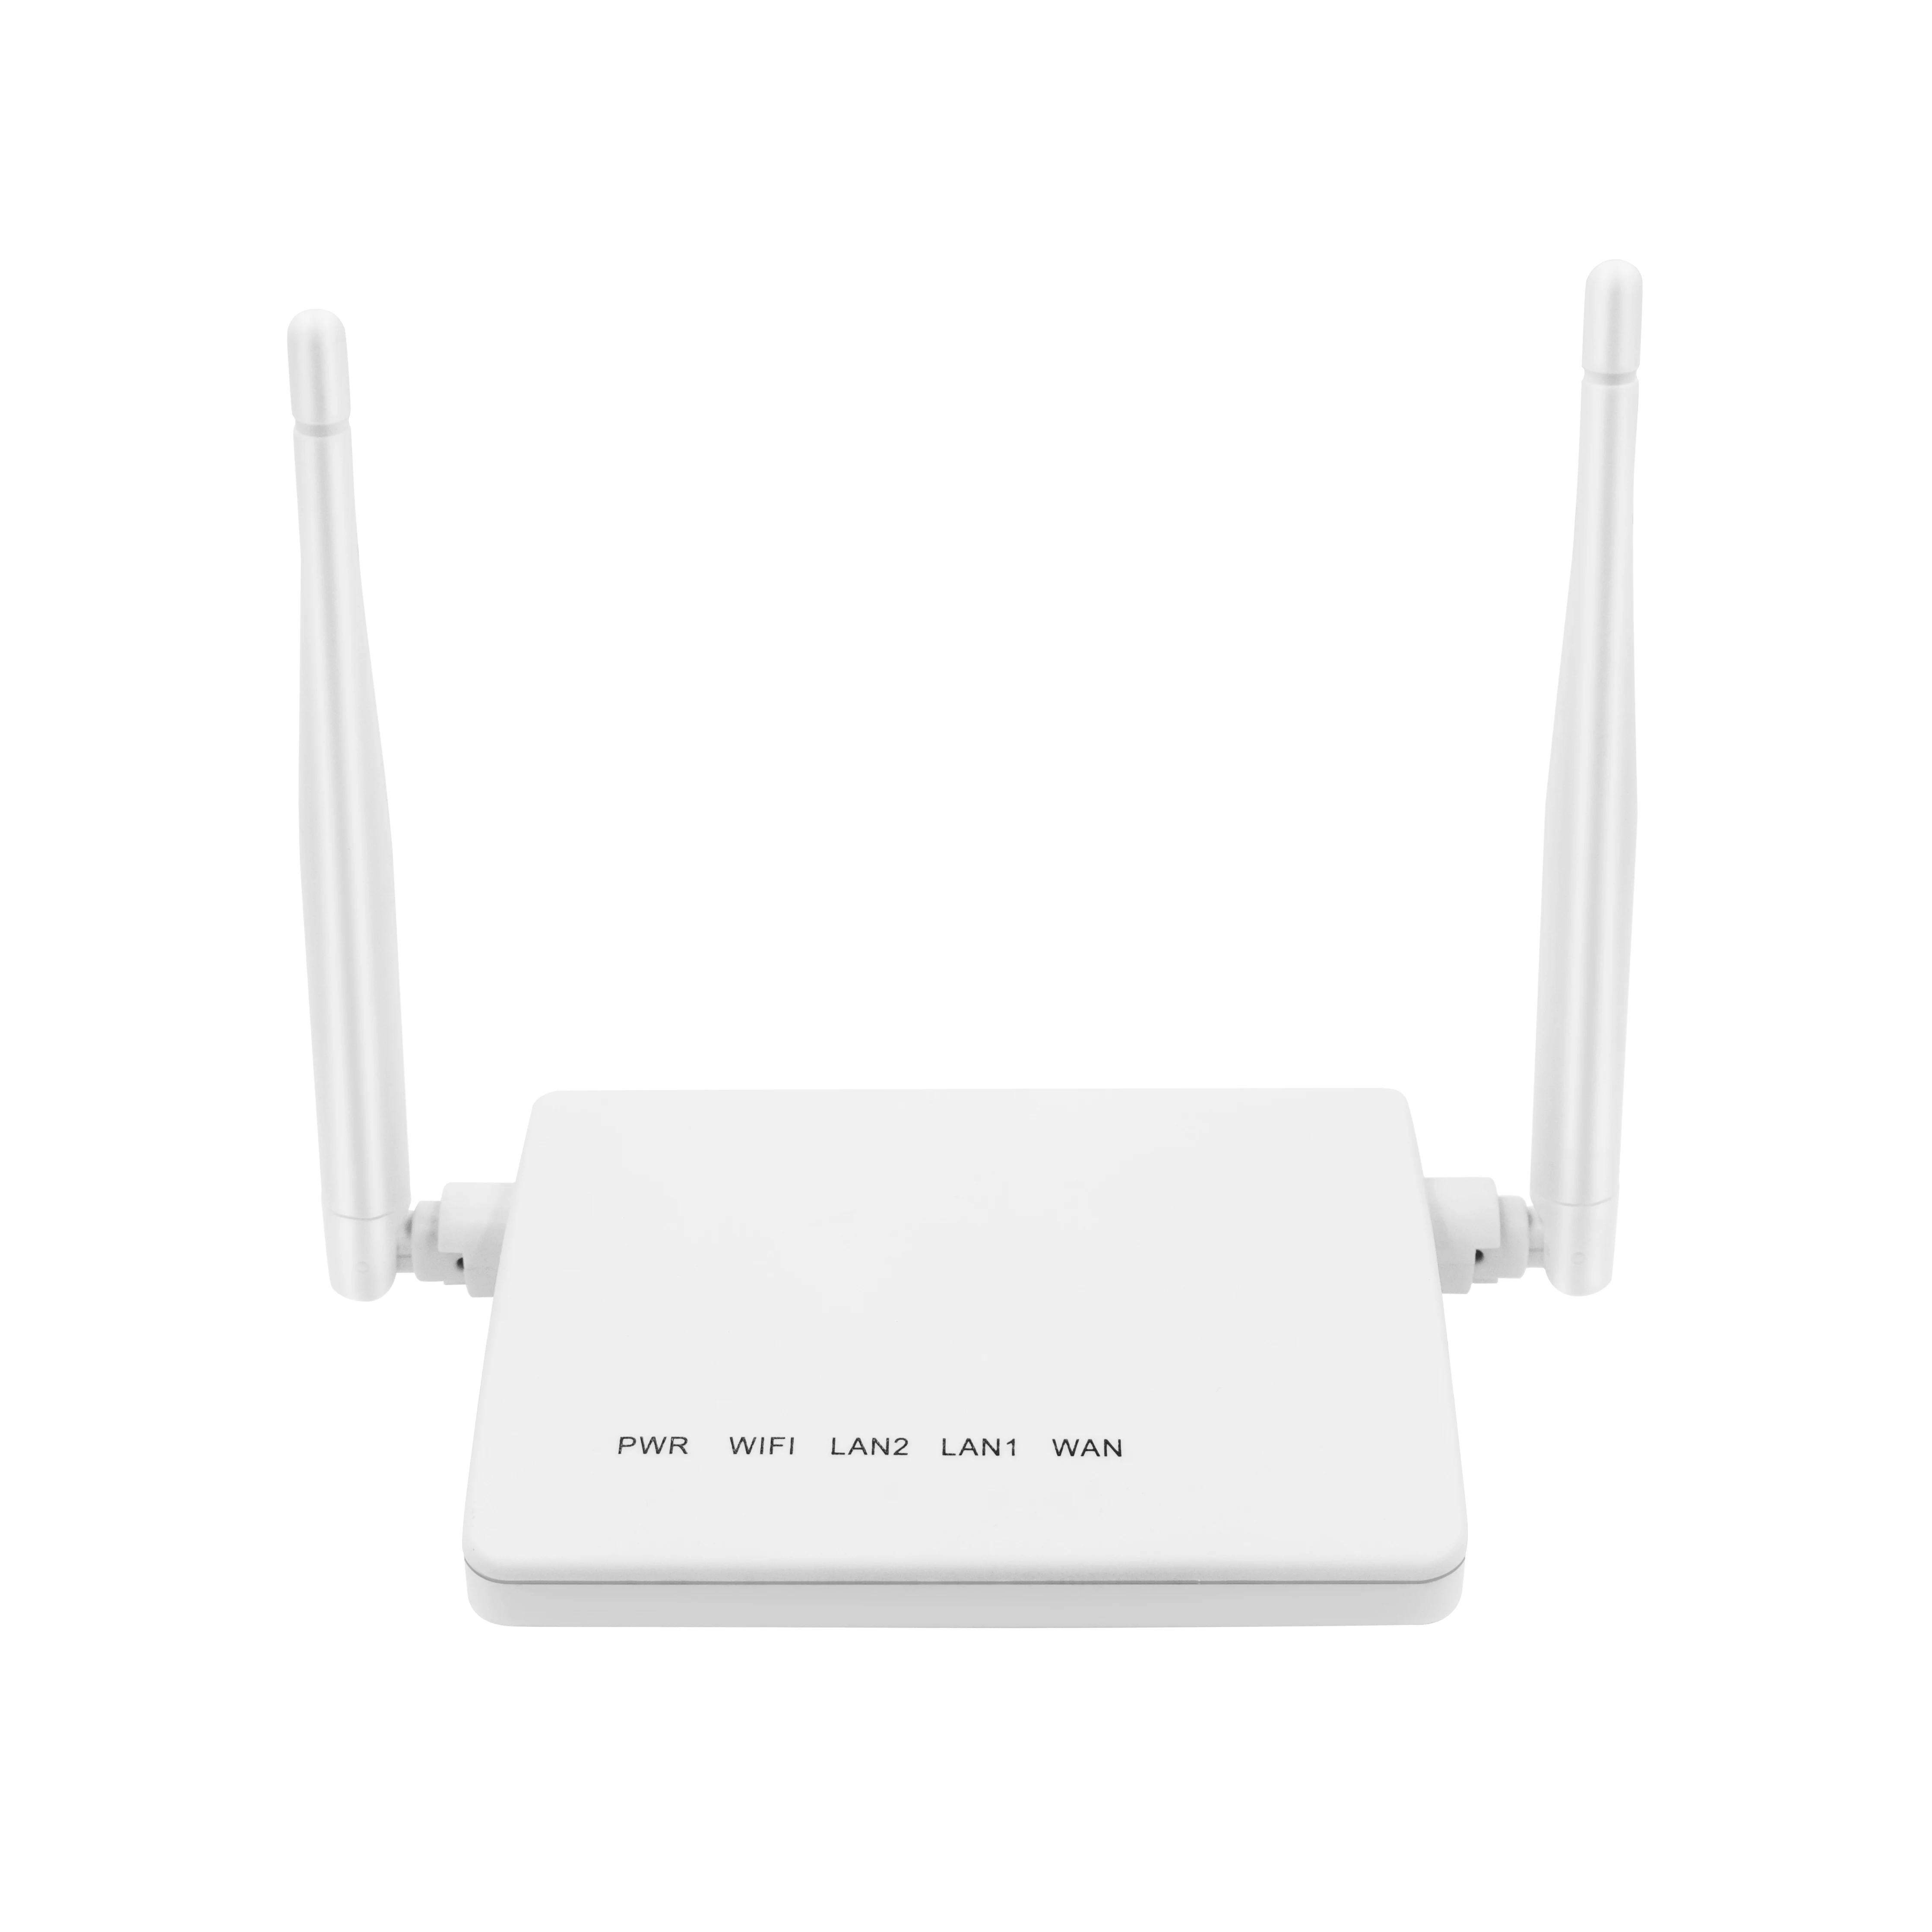 Wi-Fi-роутер tp-link, 300 Мбит/с, английская версия